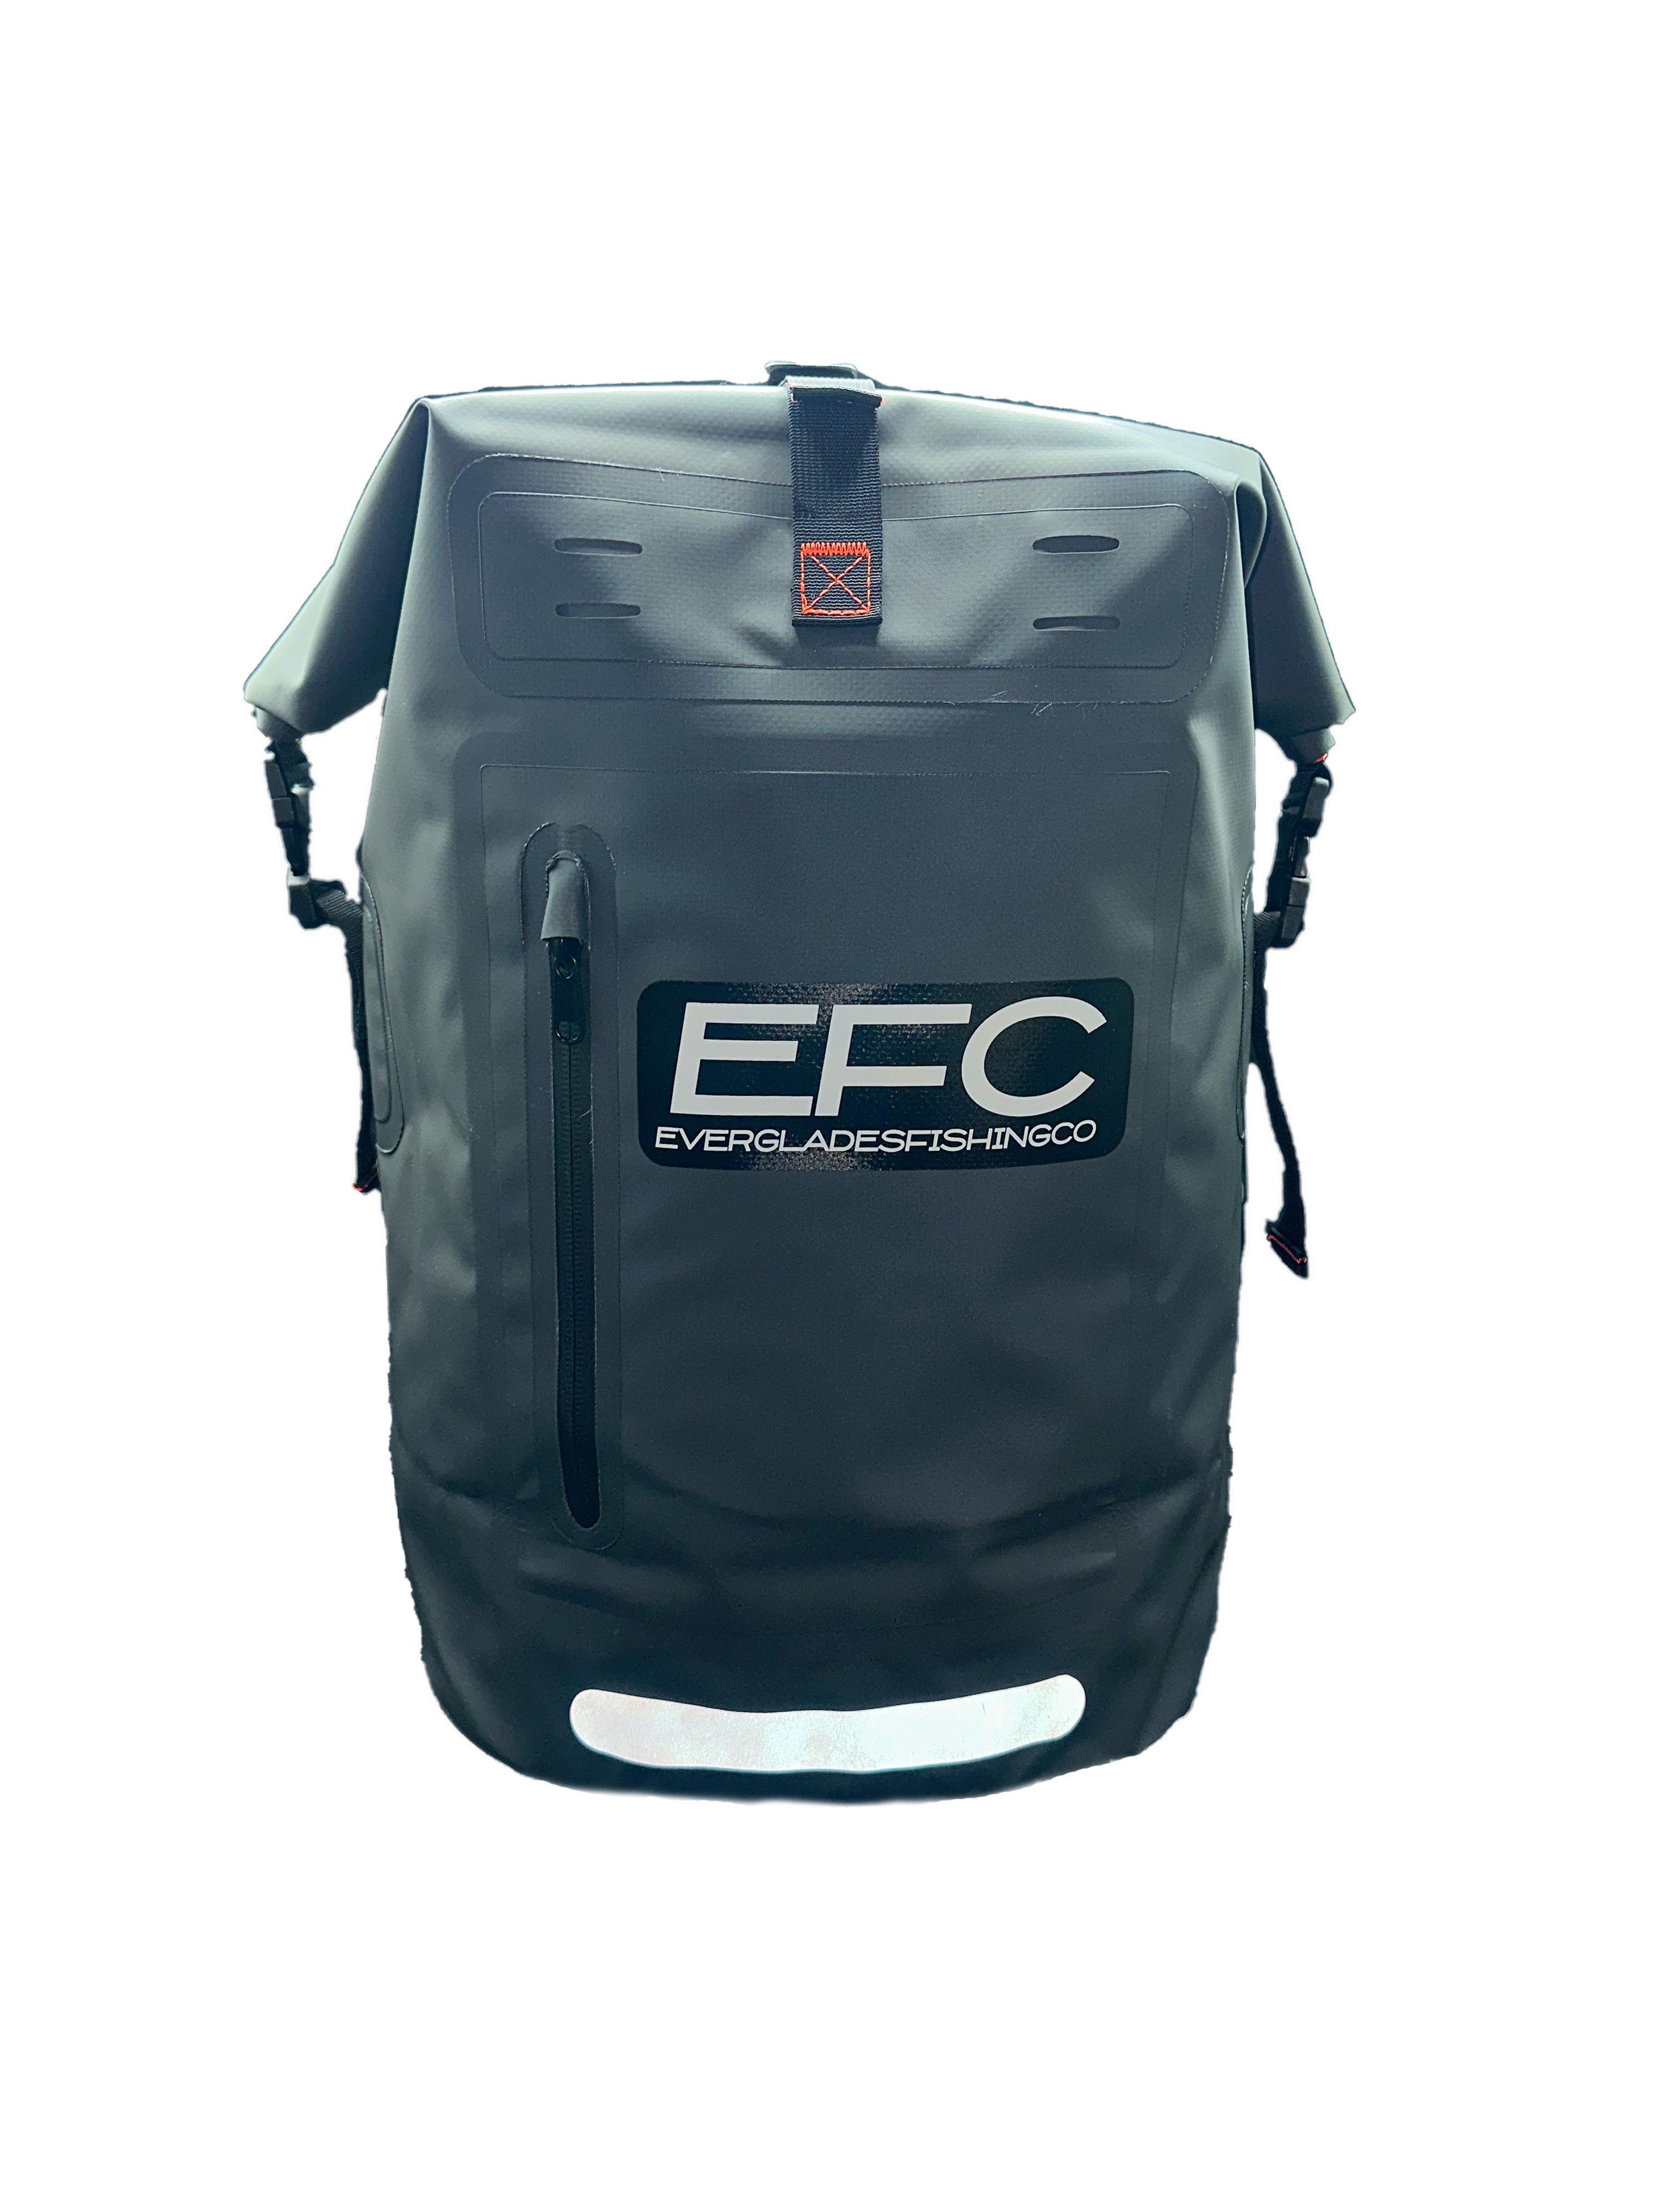 EFC GRAY DRY BAG – Everglades Fishing Co